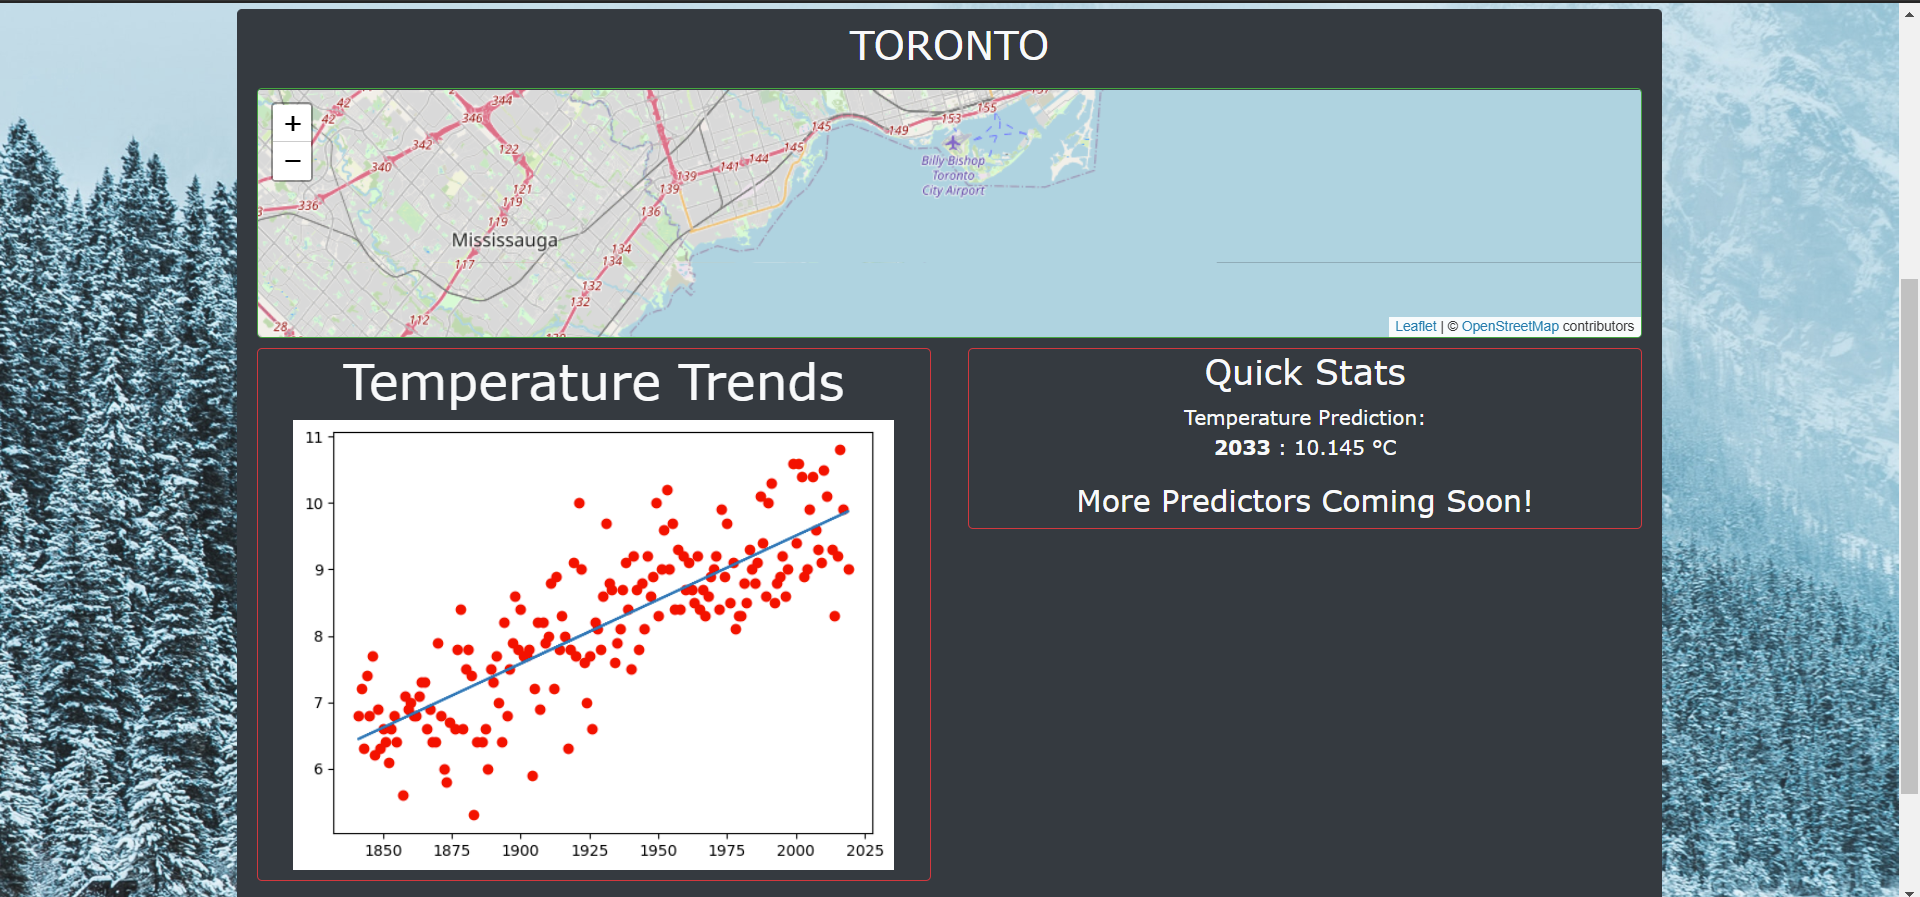 Visualizations Search - Toronto